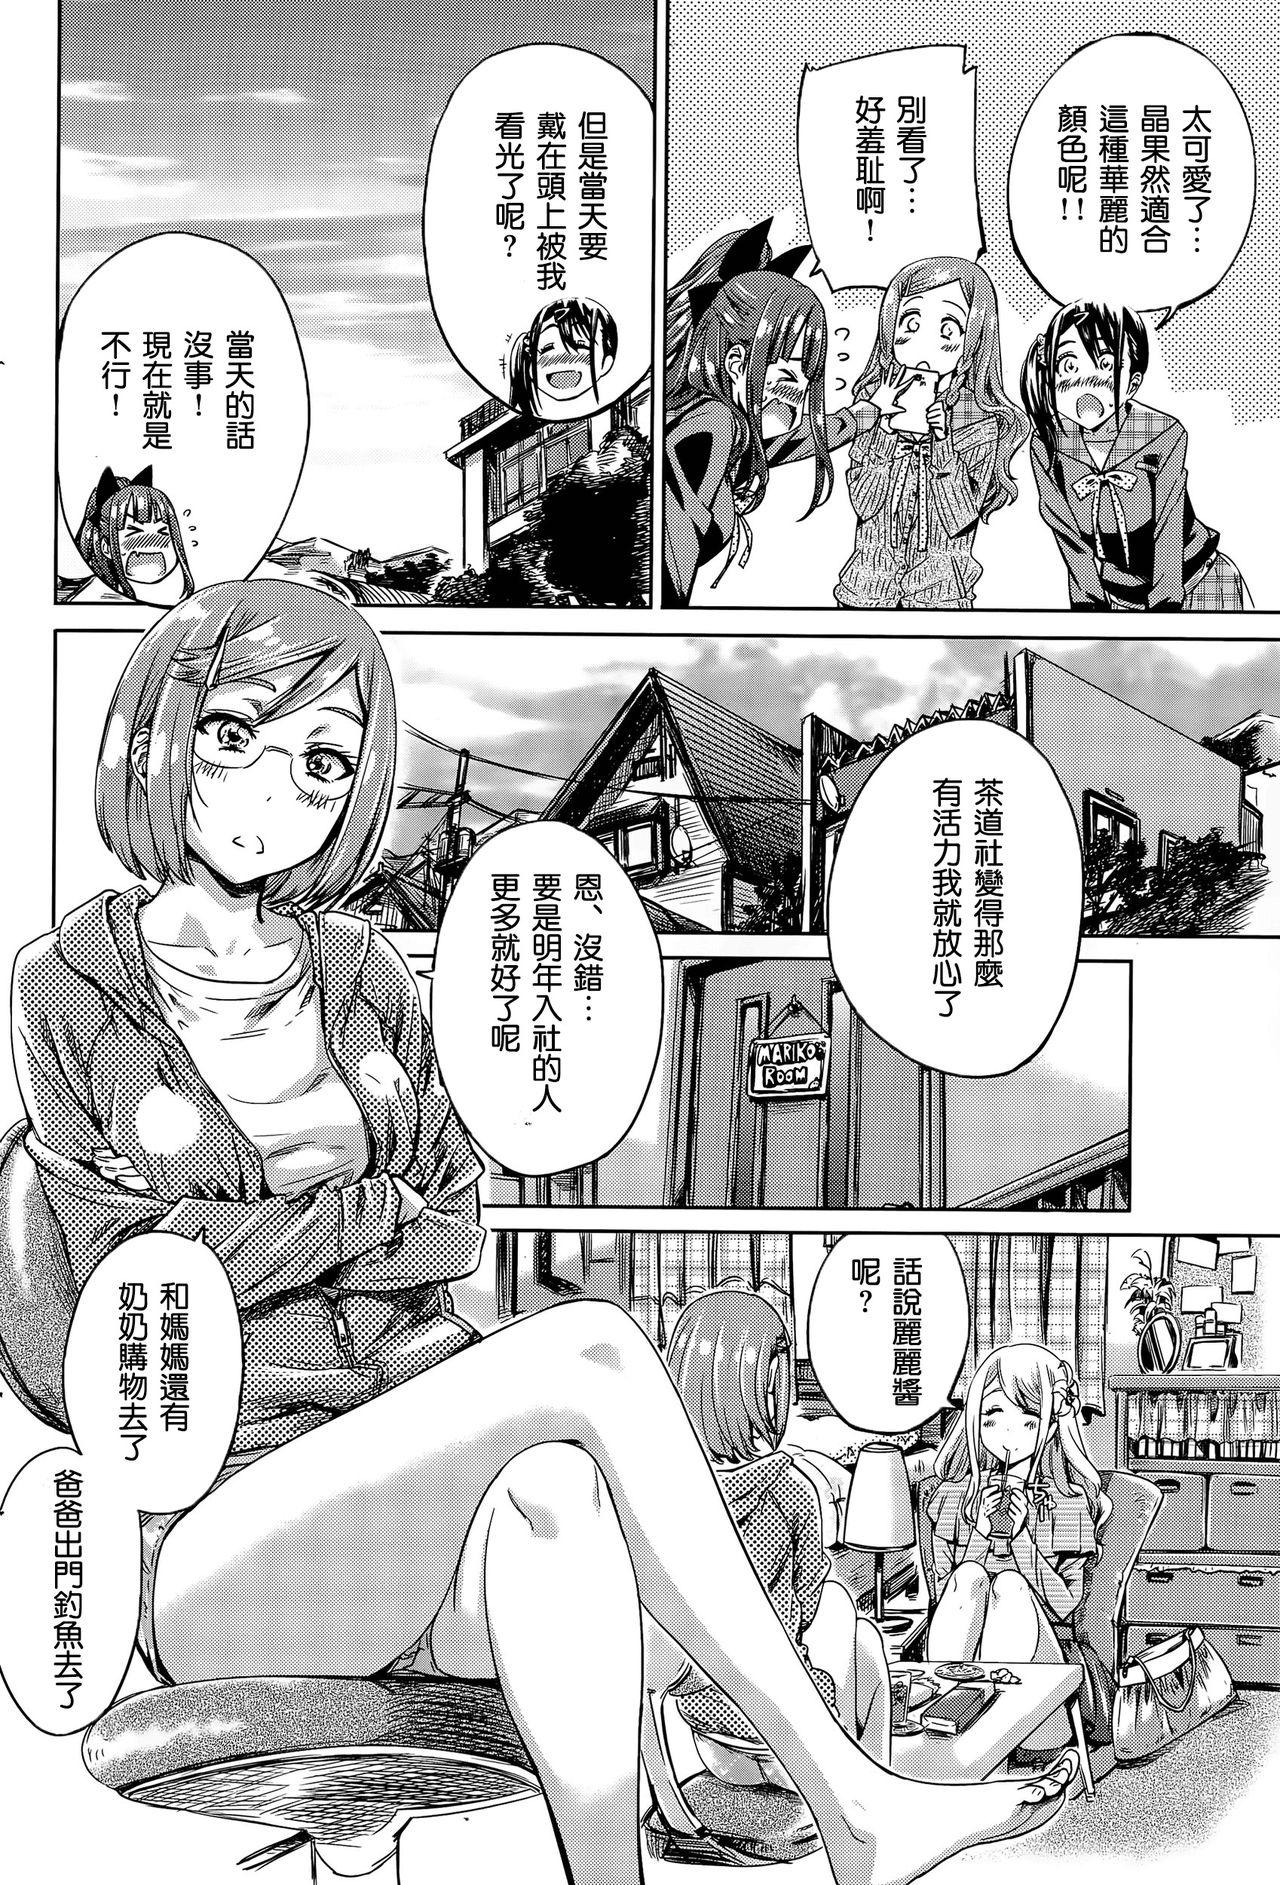 Action Nadeshiko Hiyori #5 Analfucking - Page 9